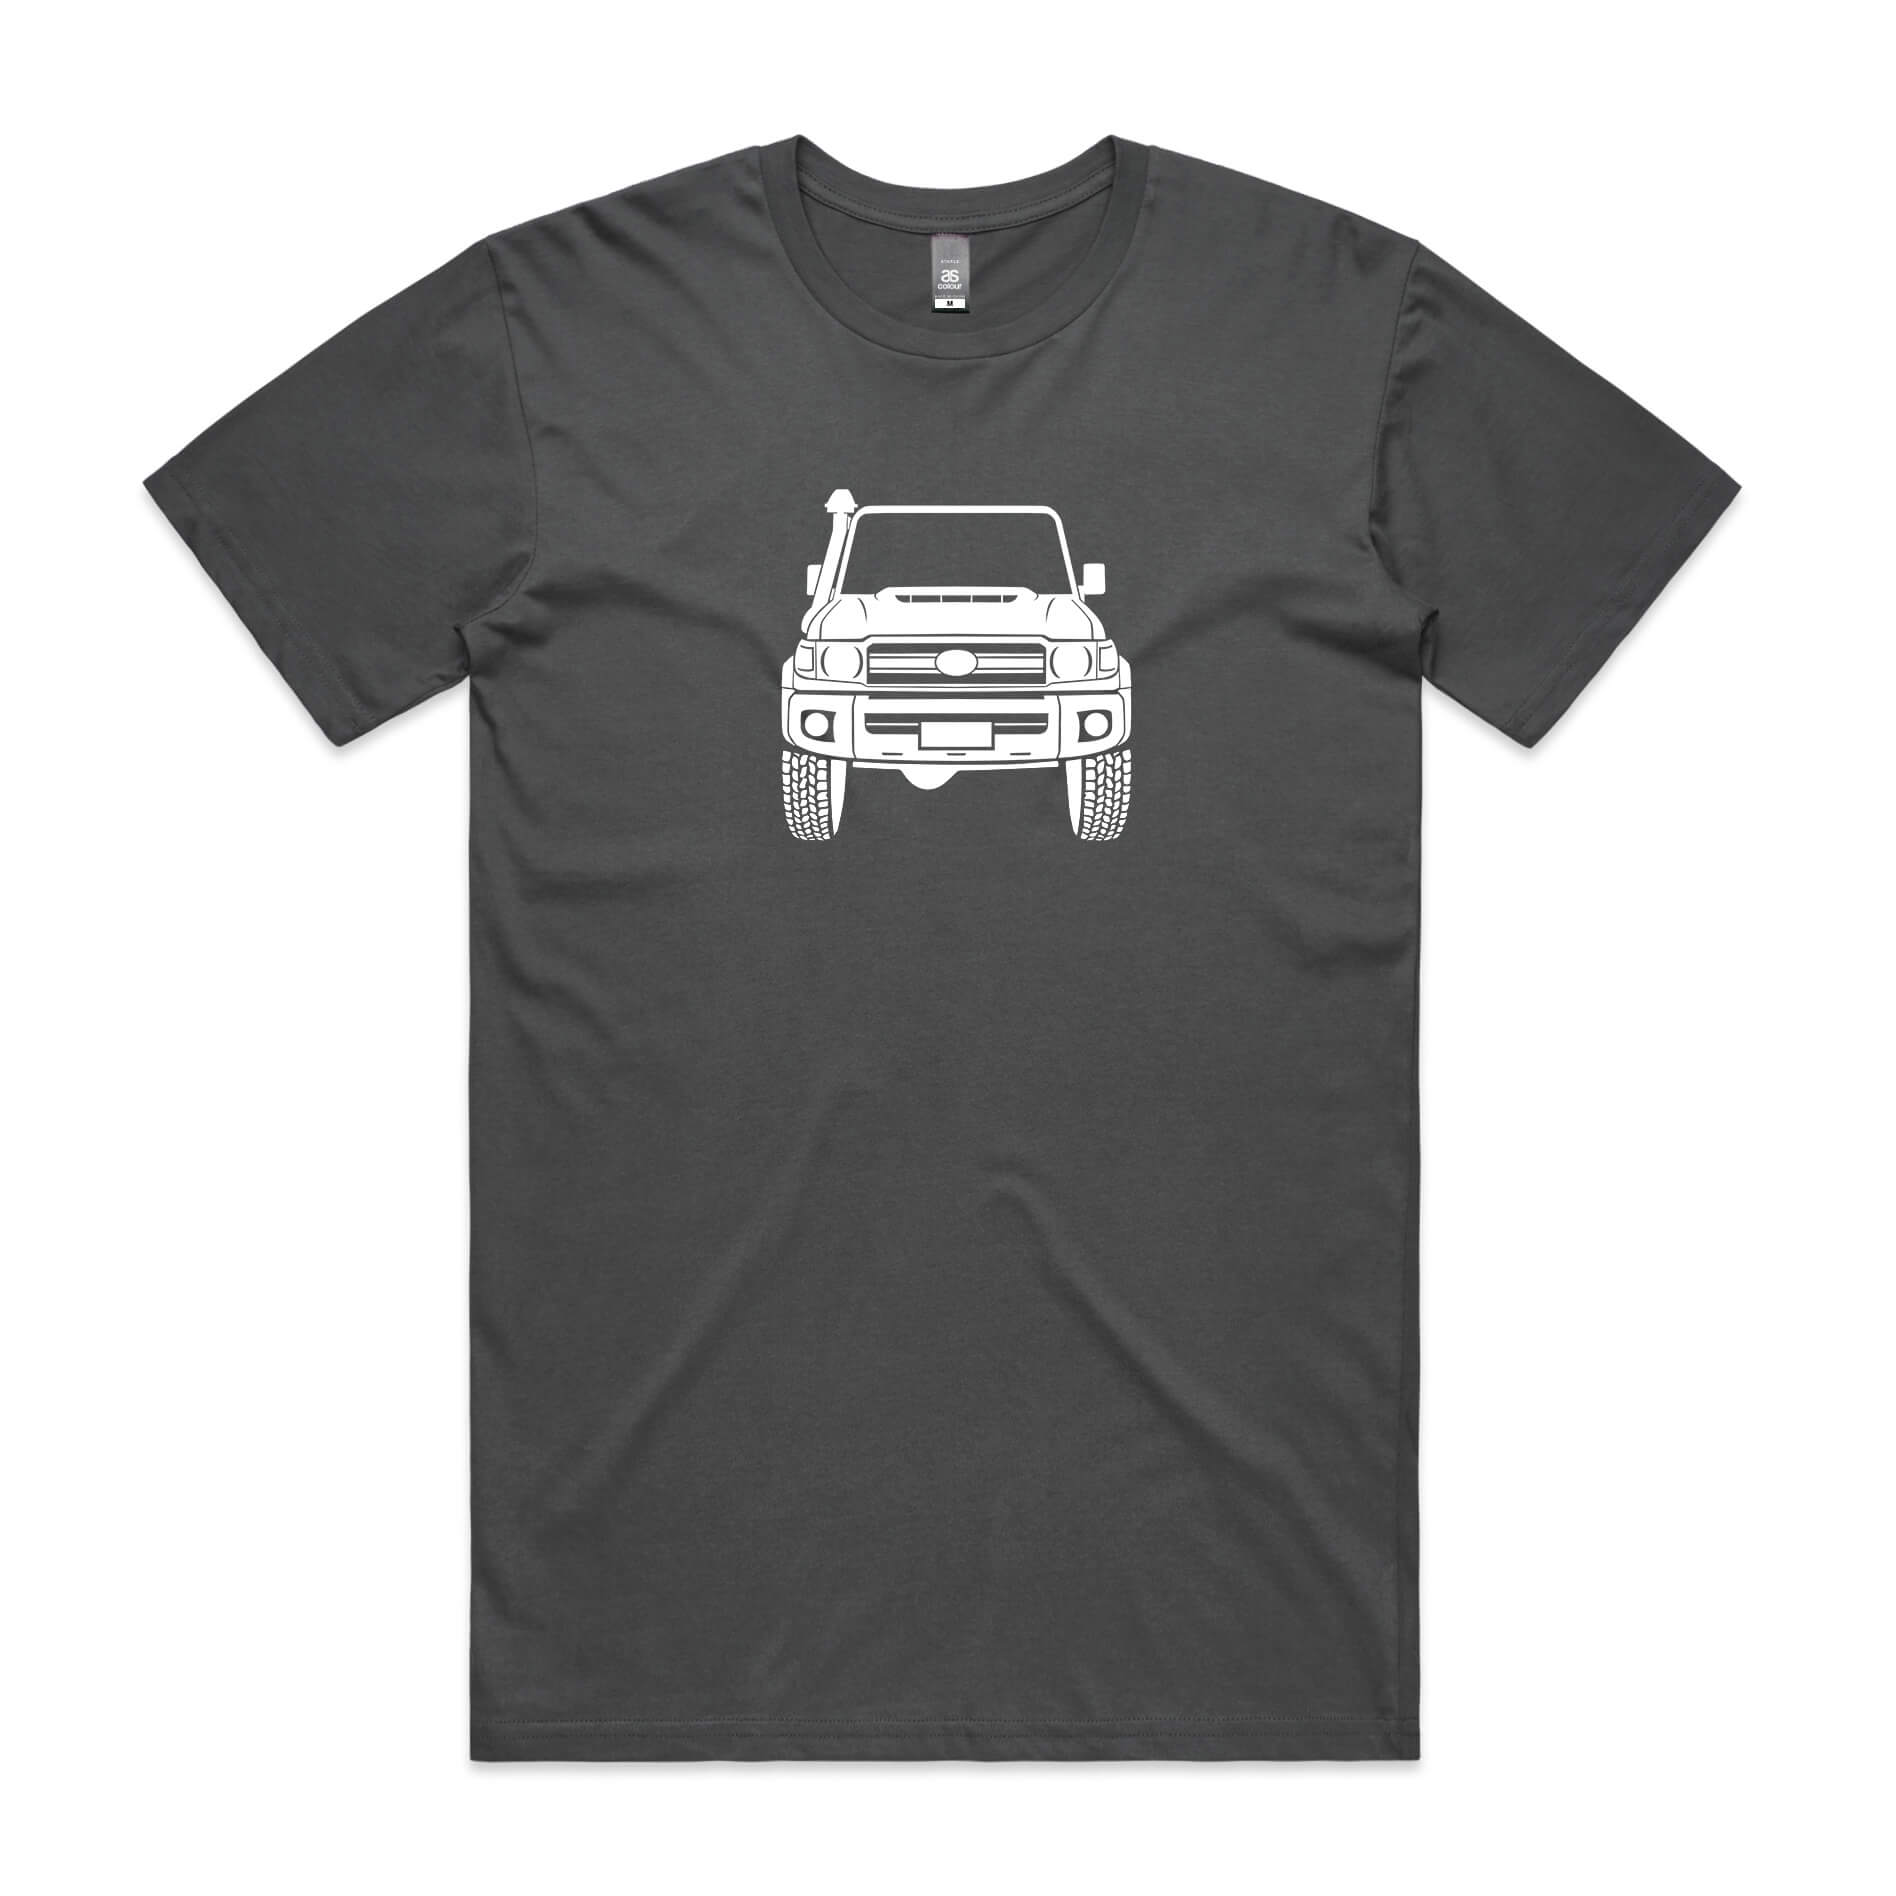 Toyota LandCruiser 70 t-shirt in charcoal grey